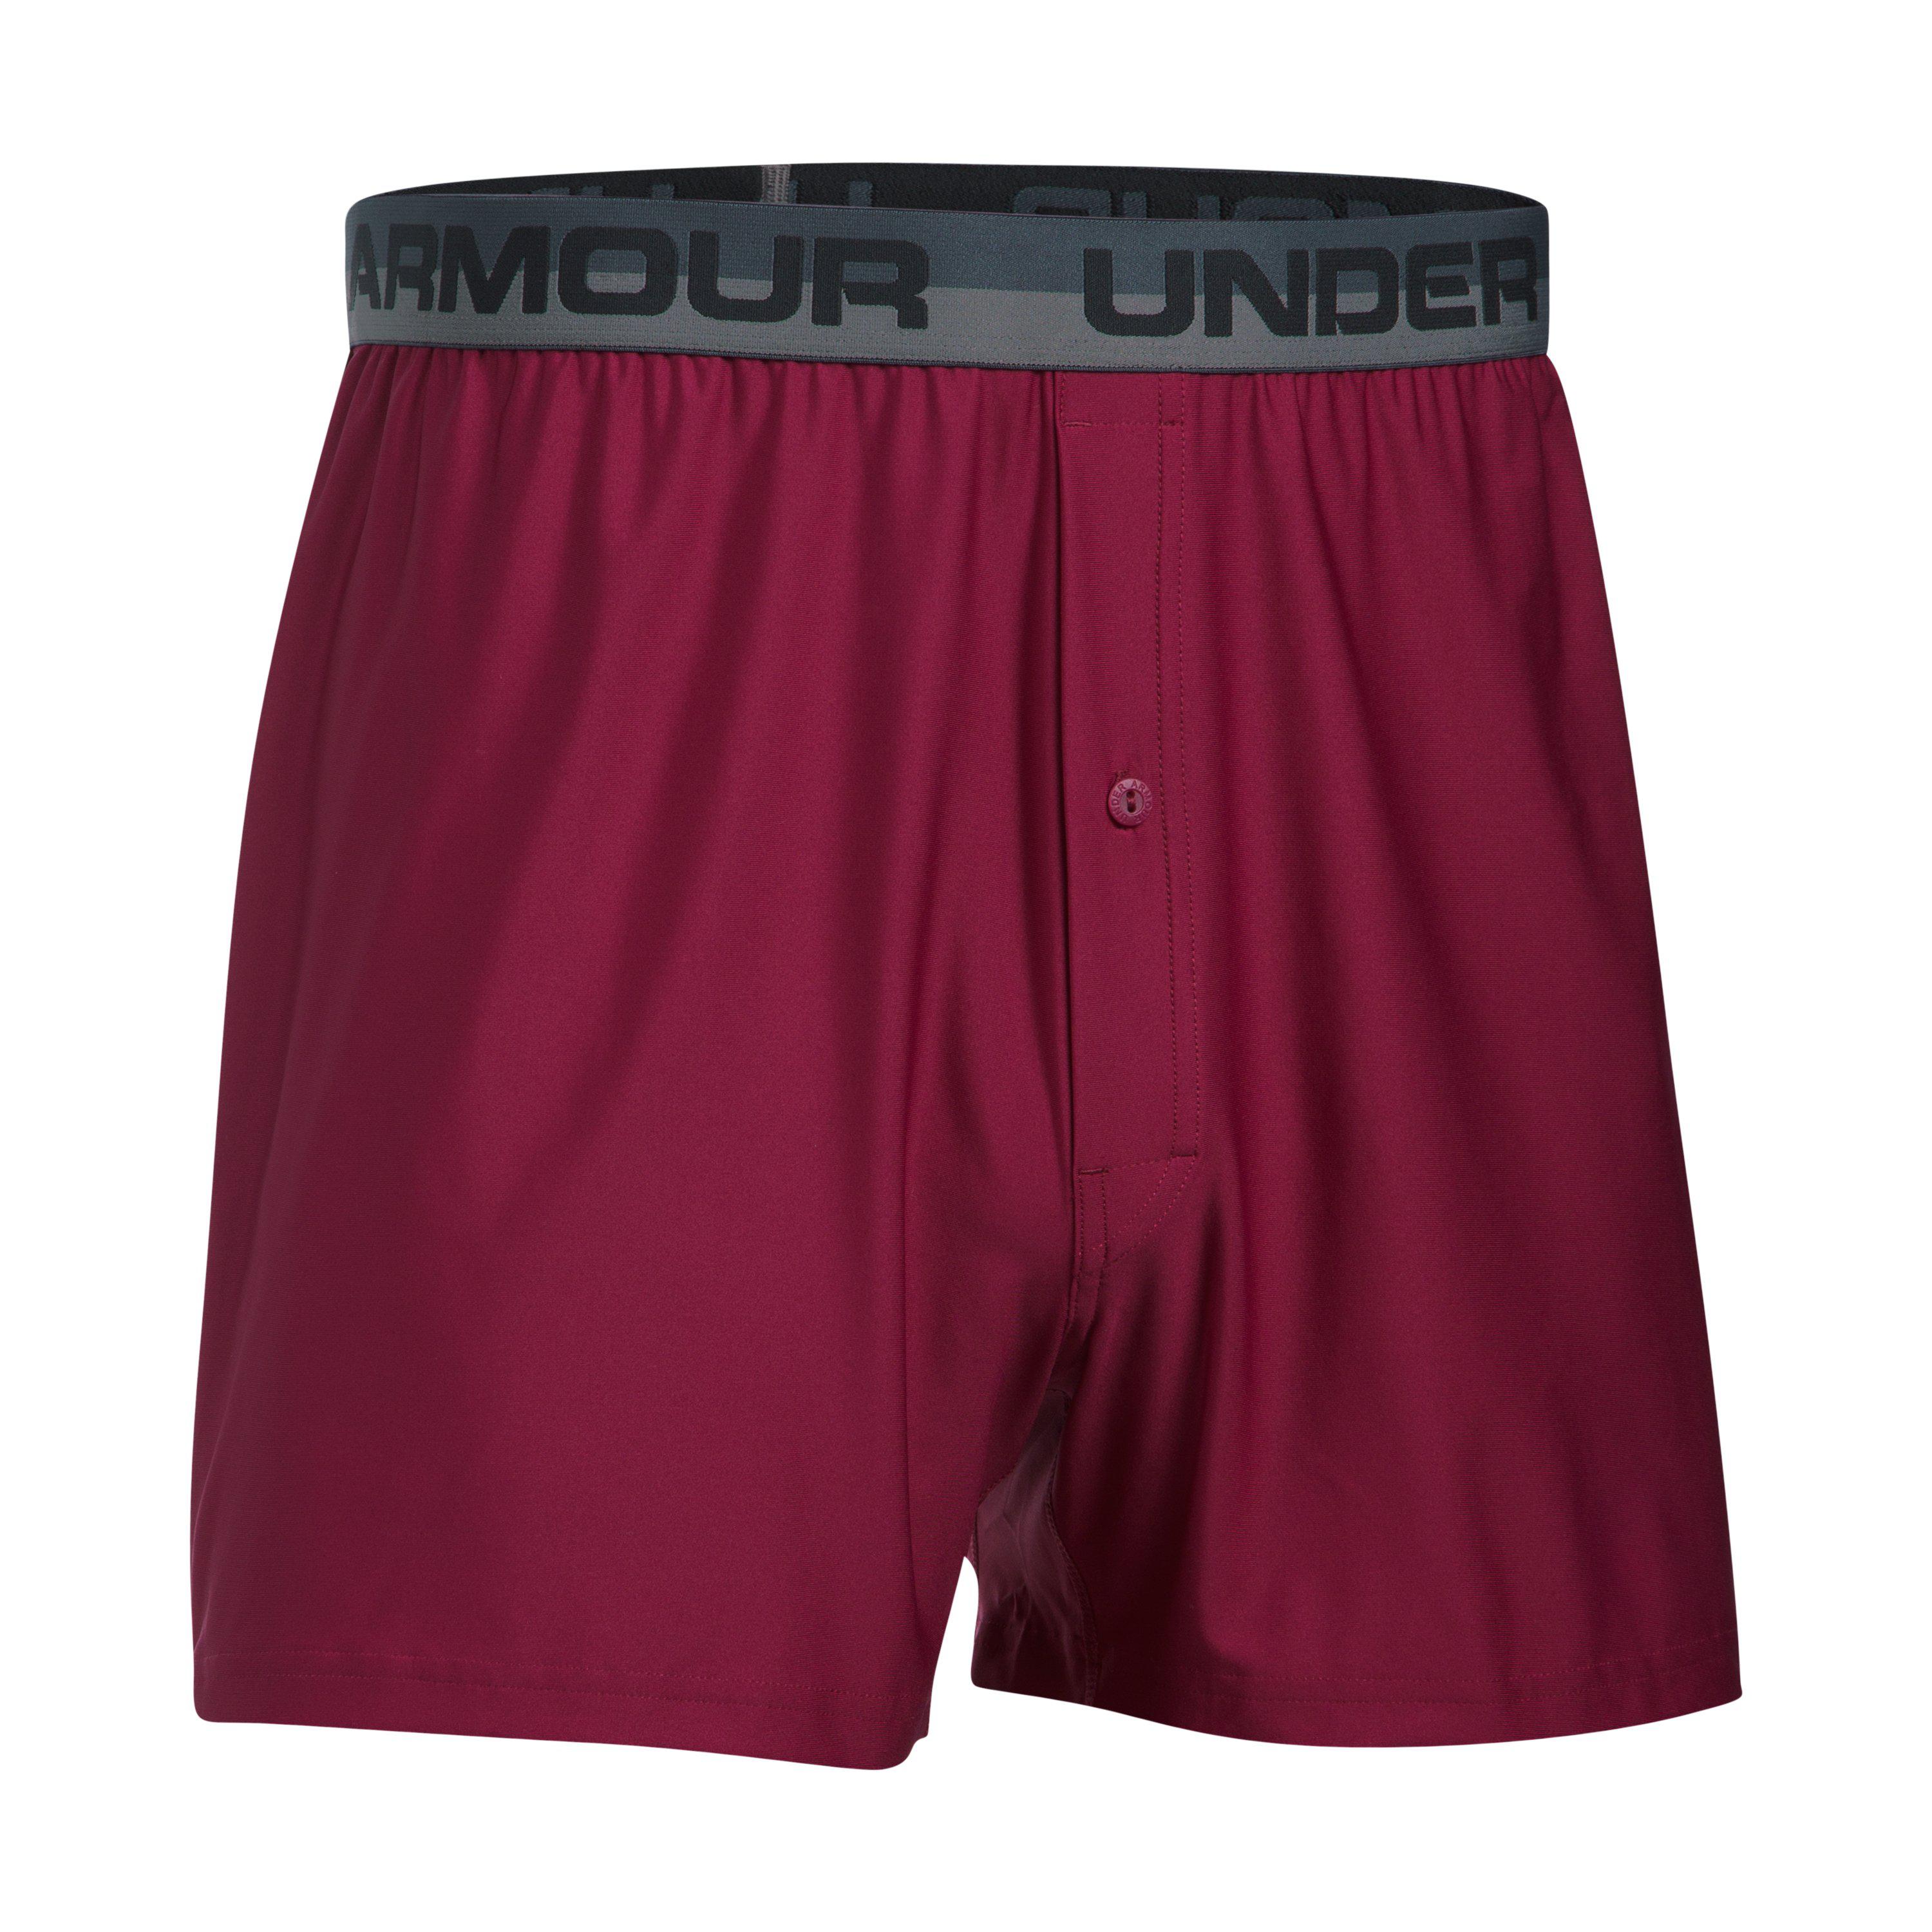 Under Armour Men's Ua Original Series Boxer Shorts for Men | Lyst